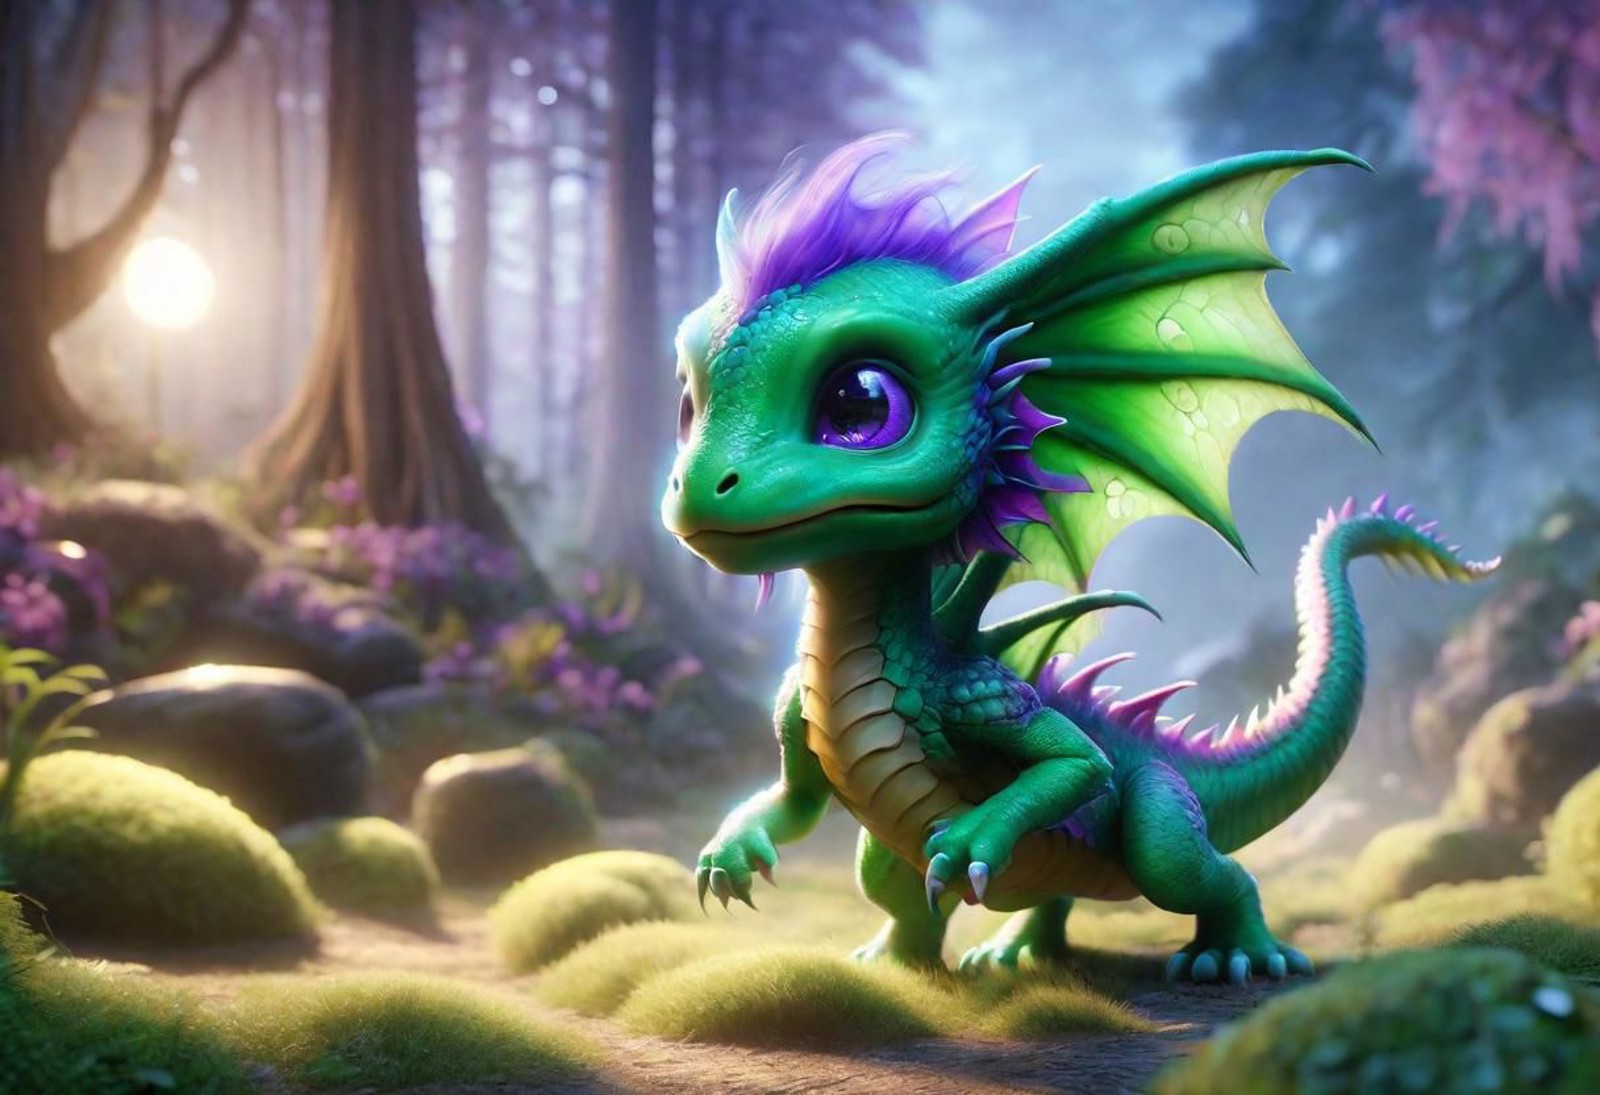 Green purple bluish Baby dragon, cute, glowing in night, glowing eyes
, volumetrics dtx, (film grain, blurry background, b...